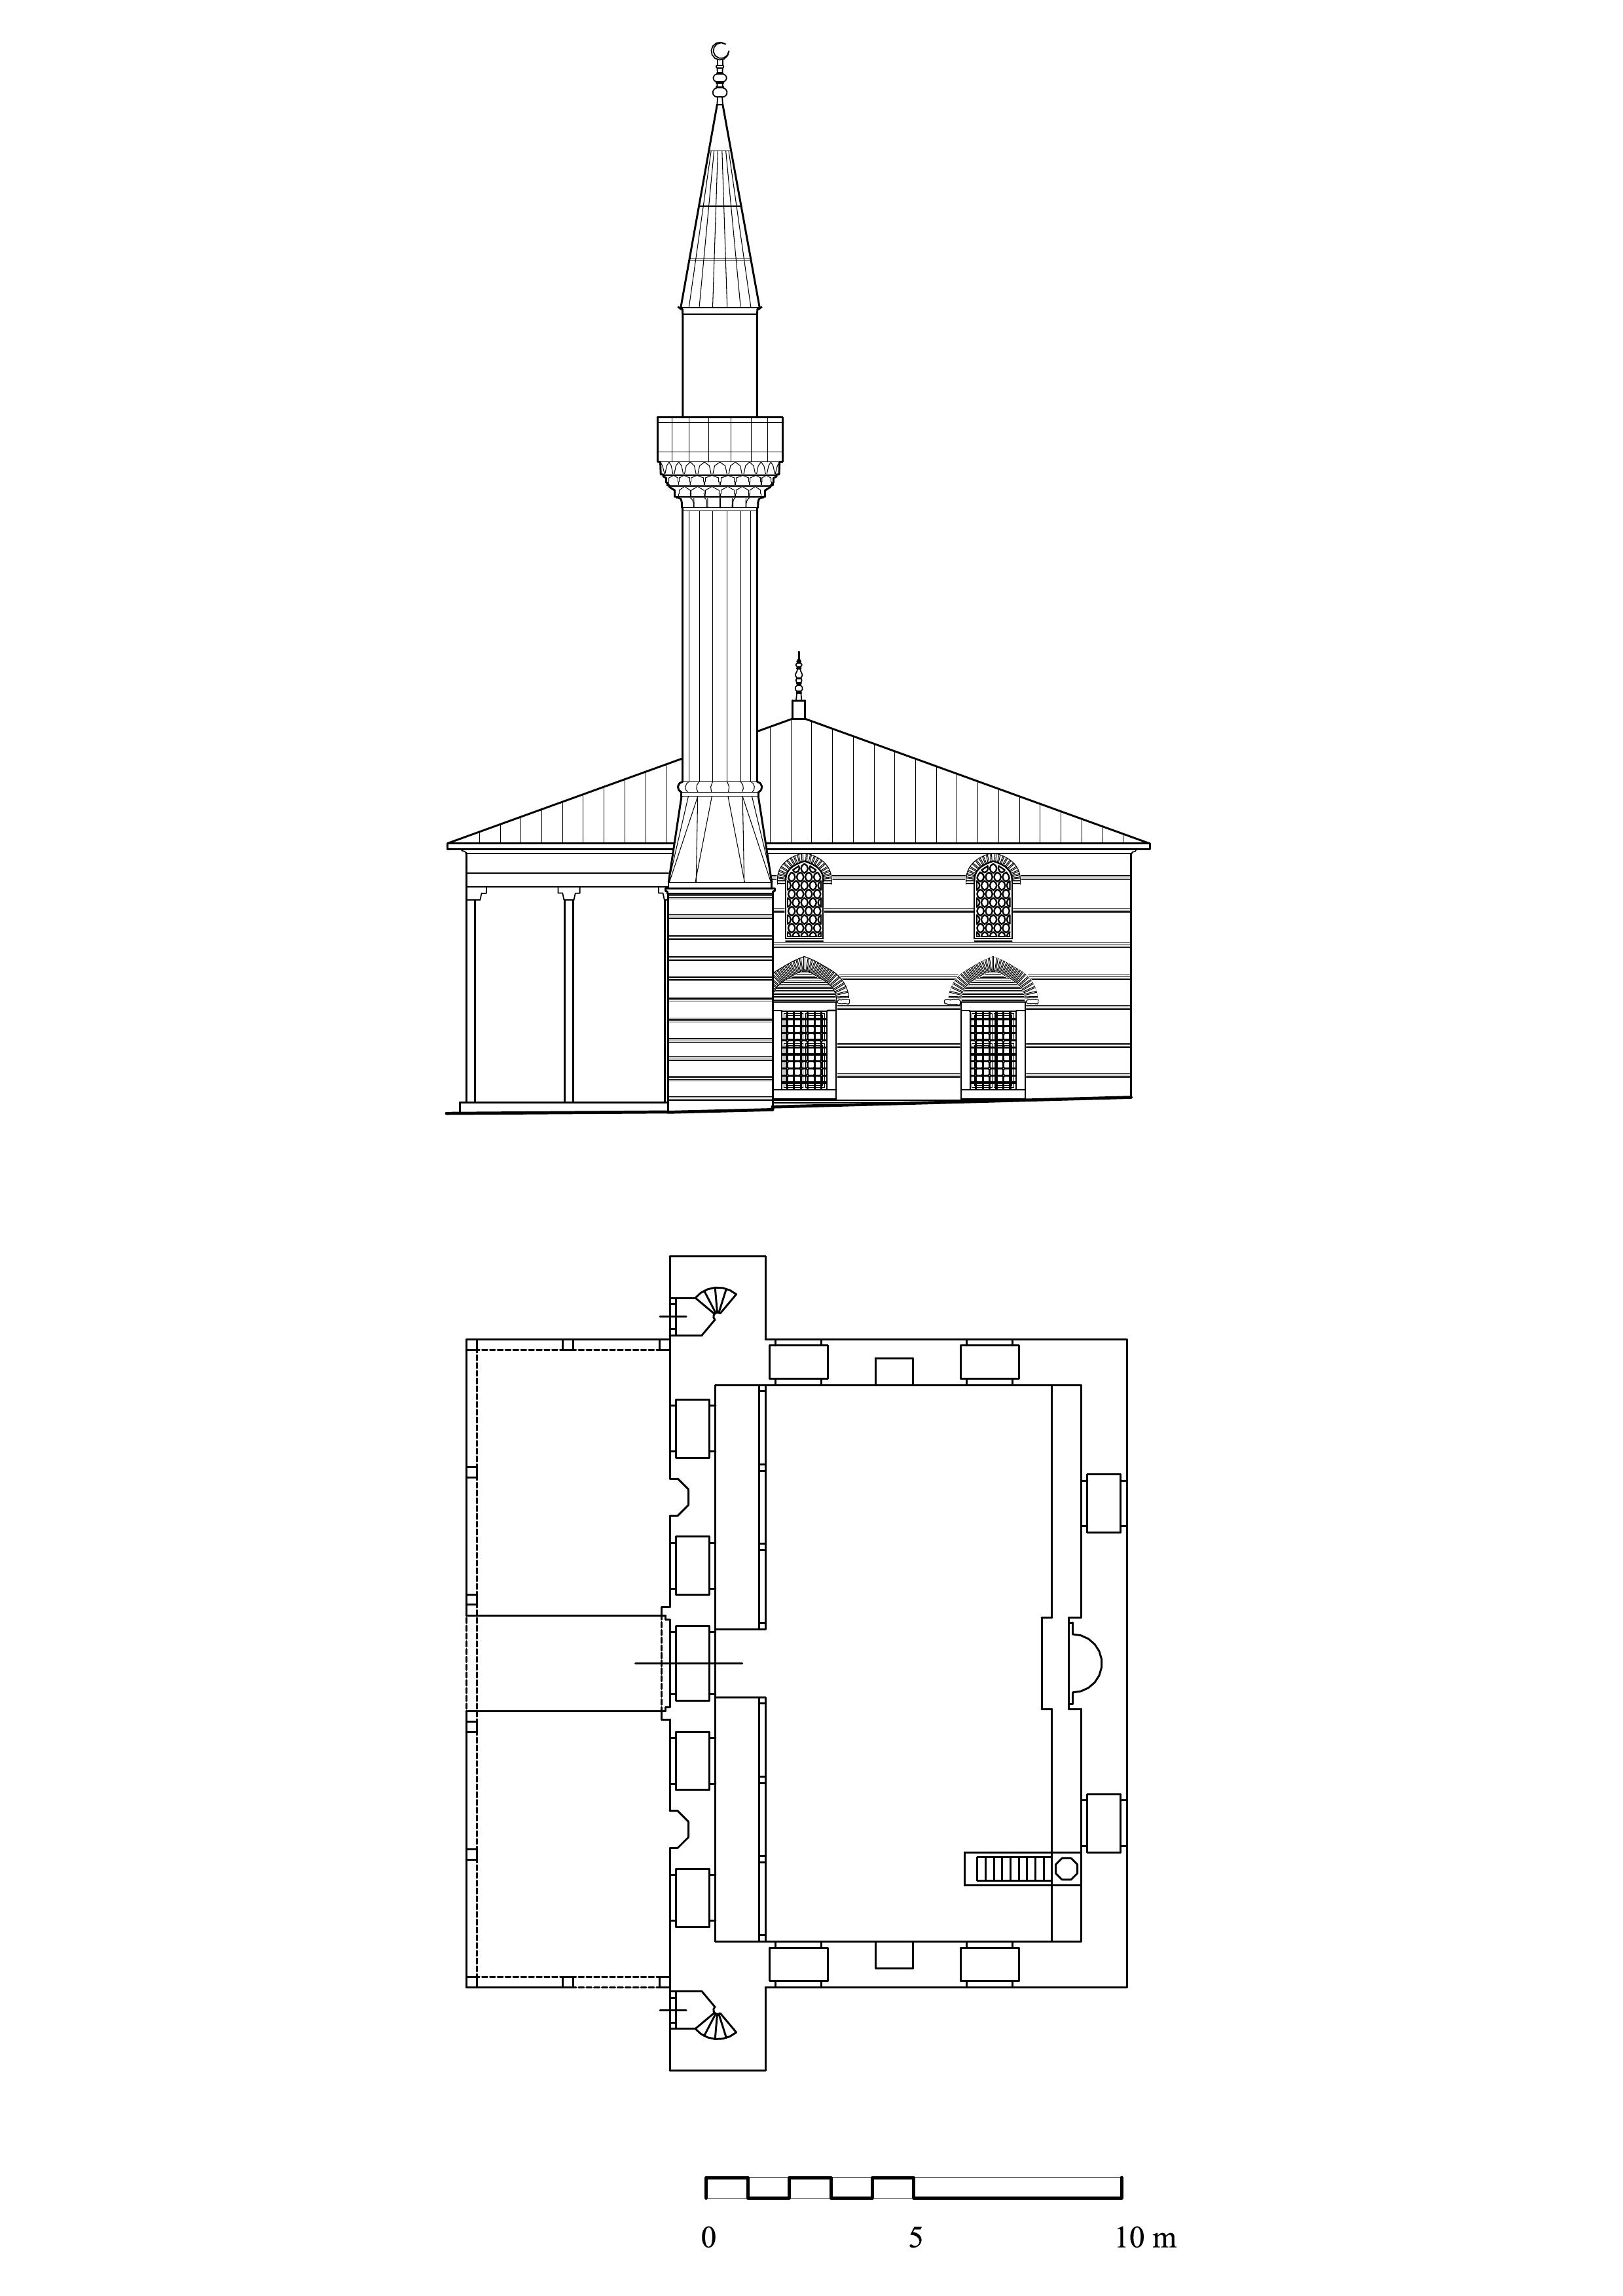 Floor plan and elevation of Bostancibasi Iskender Pasa Mosque